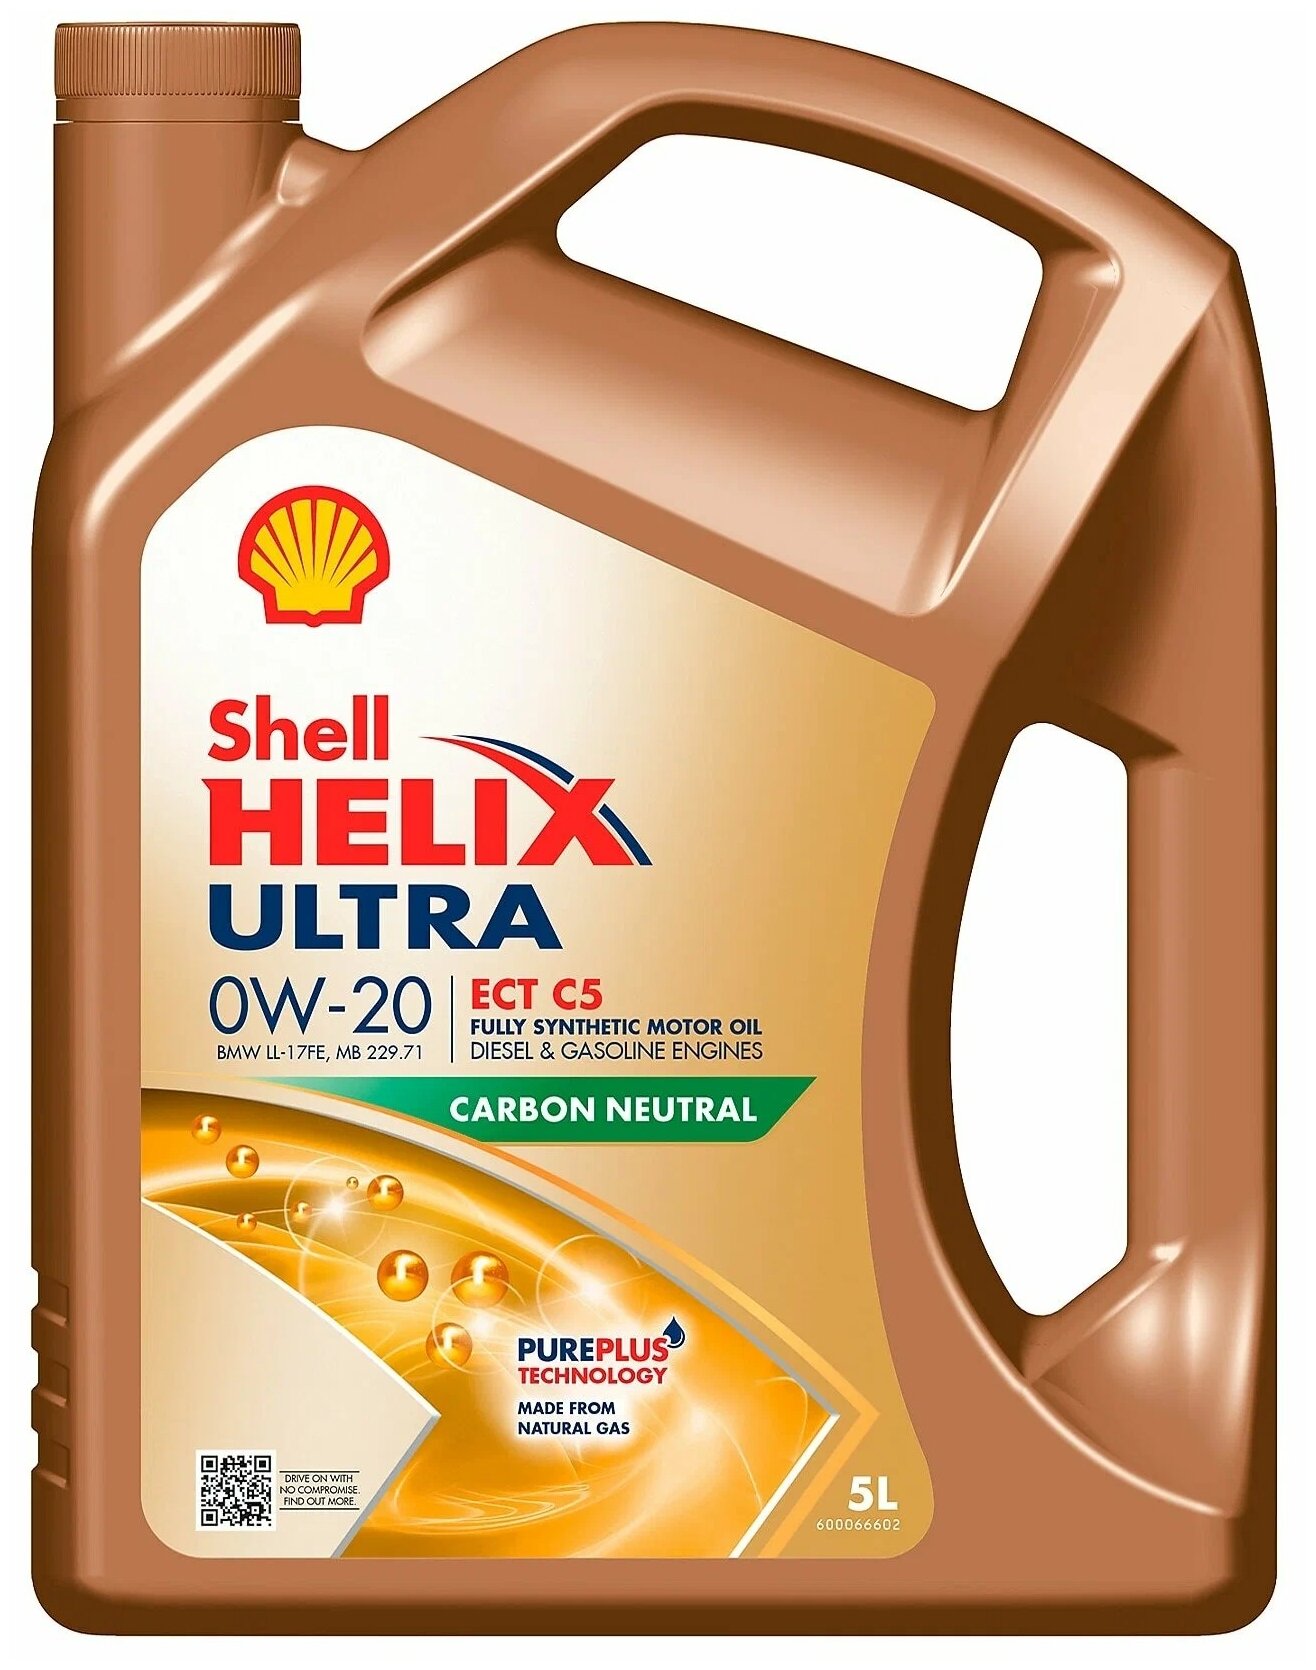 Shell HELIX ULTRA ECT C5 0W-20